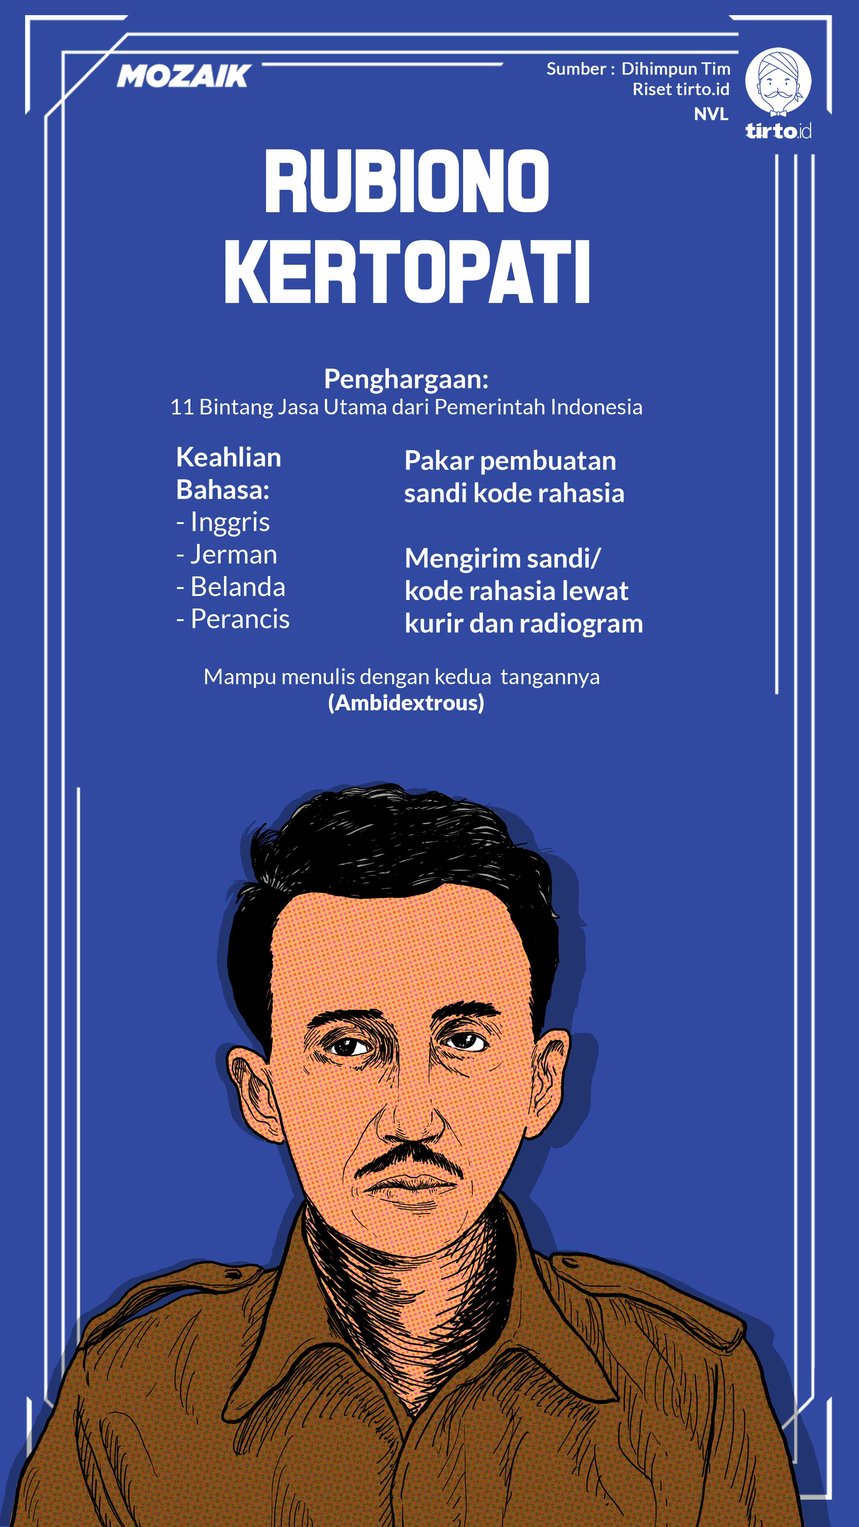 Infografik Mozaik Rubiono Kertopati